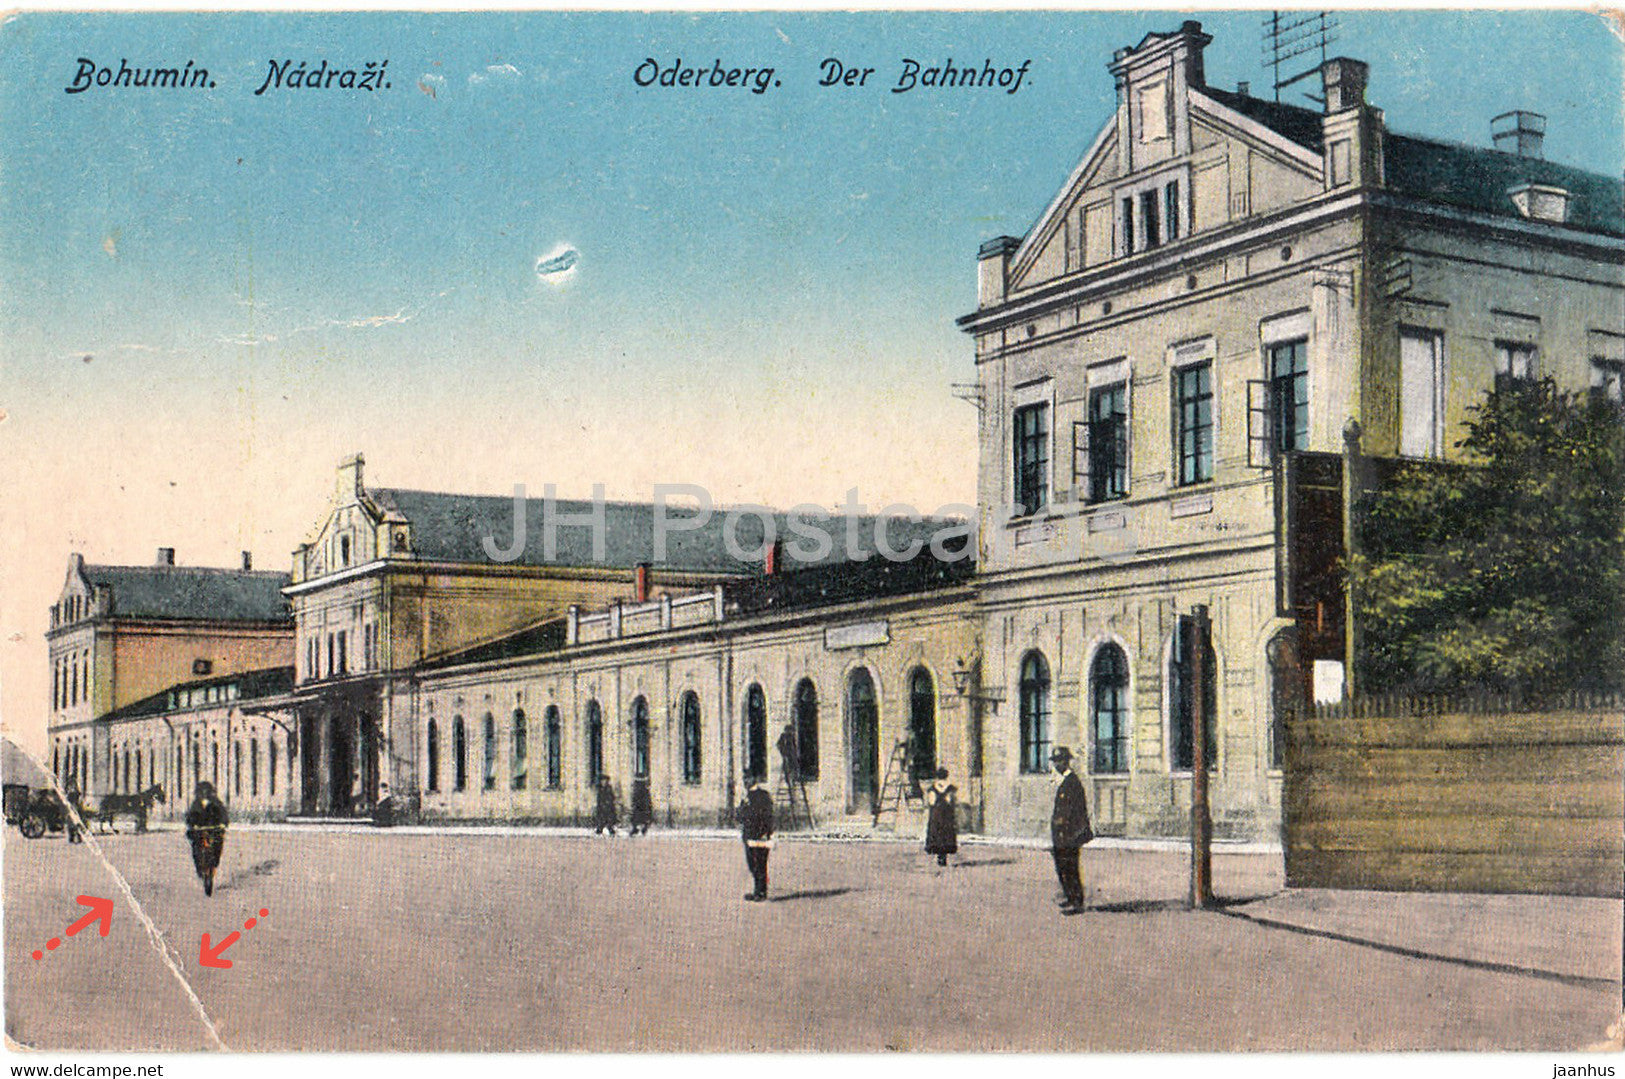 Bohumin - Nadrazi - Oderberg - Der Bahnhof - railway station - 1920 - Czech Republic - used - JH Postcards